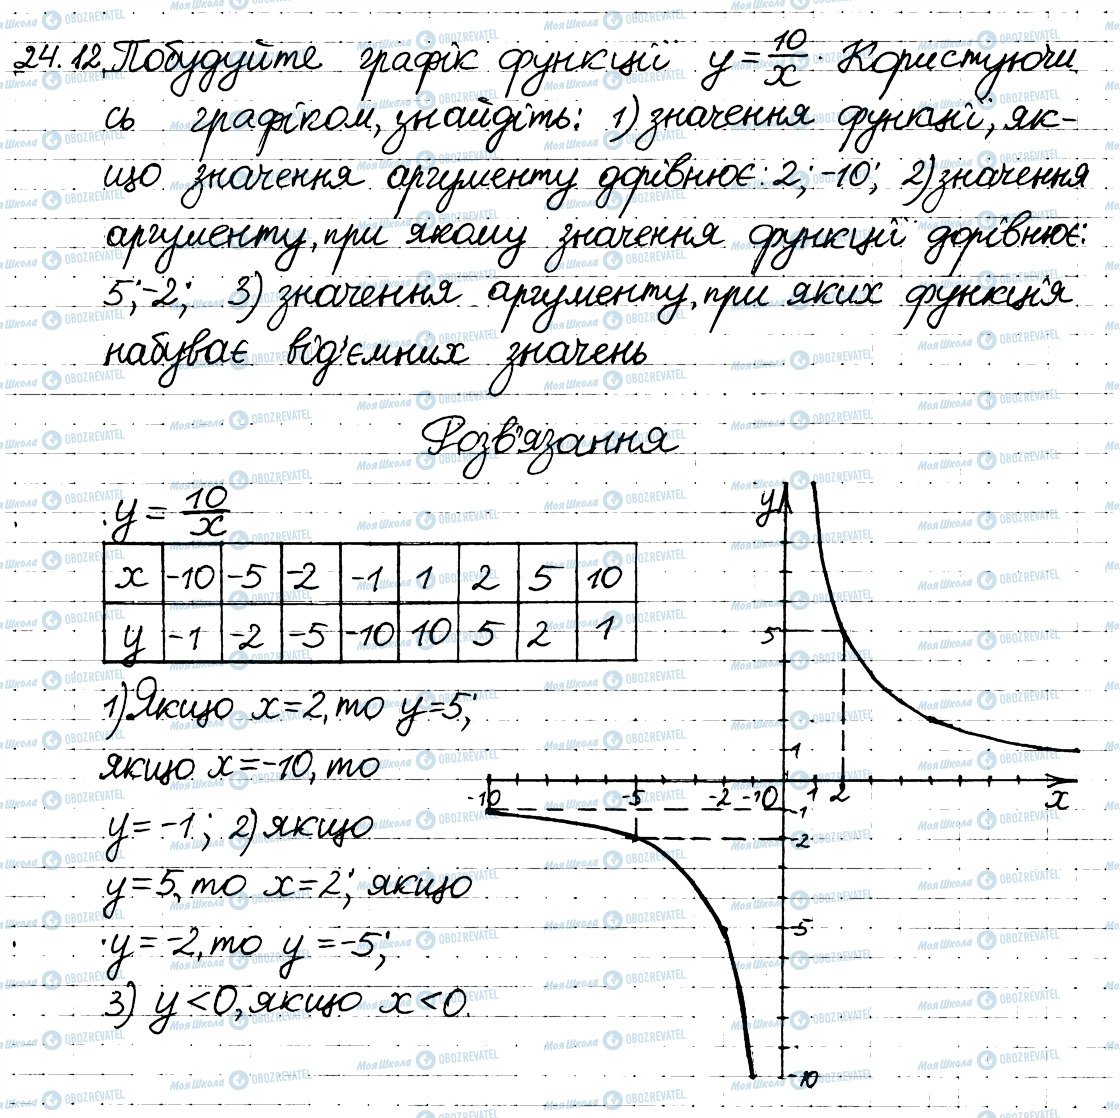 ГДЗ Алгебра 8 клас сторінка 12